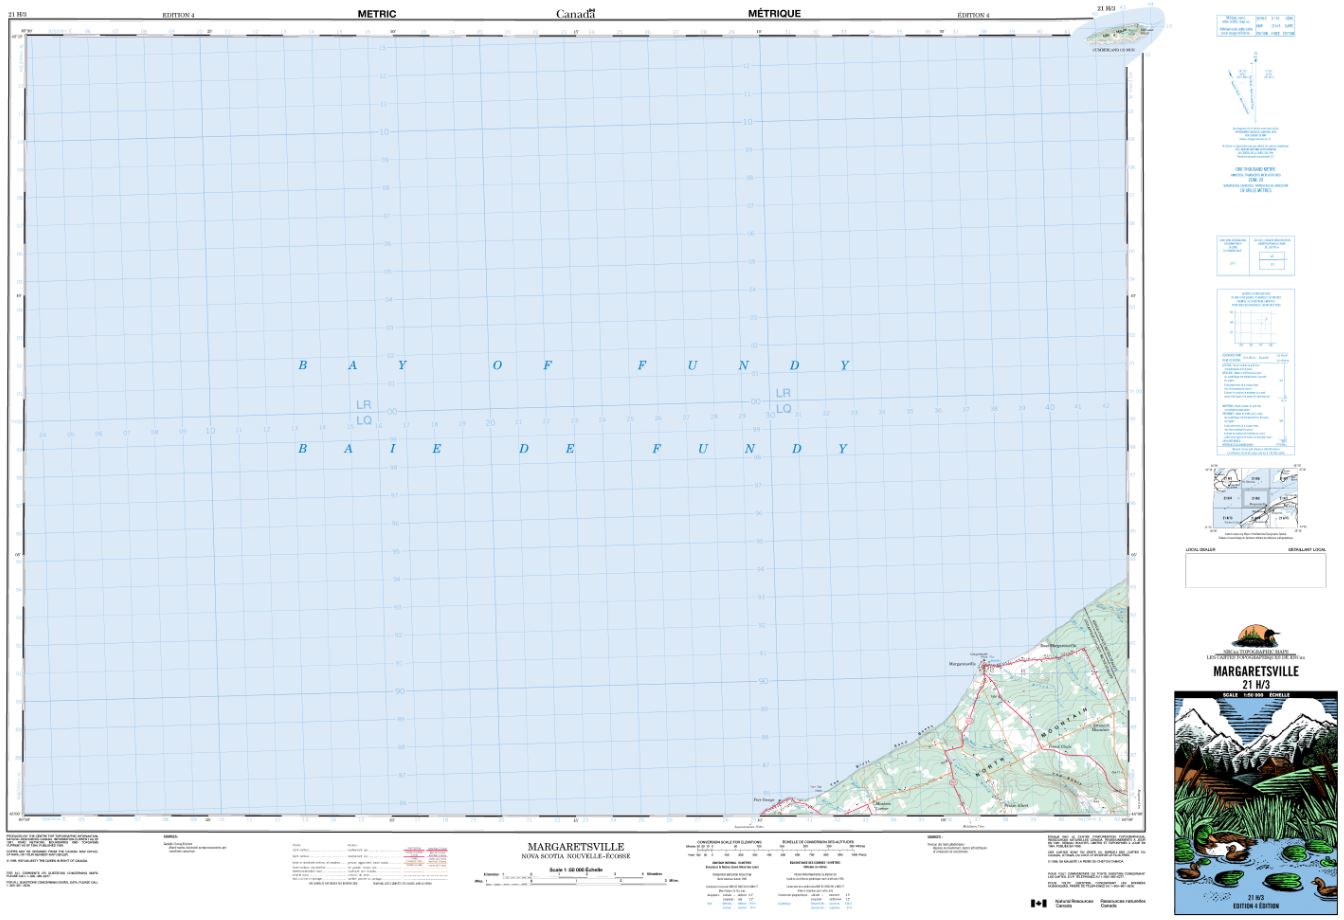 21H/03 Margaretsville Topographic Map Nova Scotia Tyvek